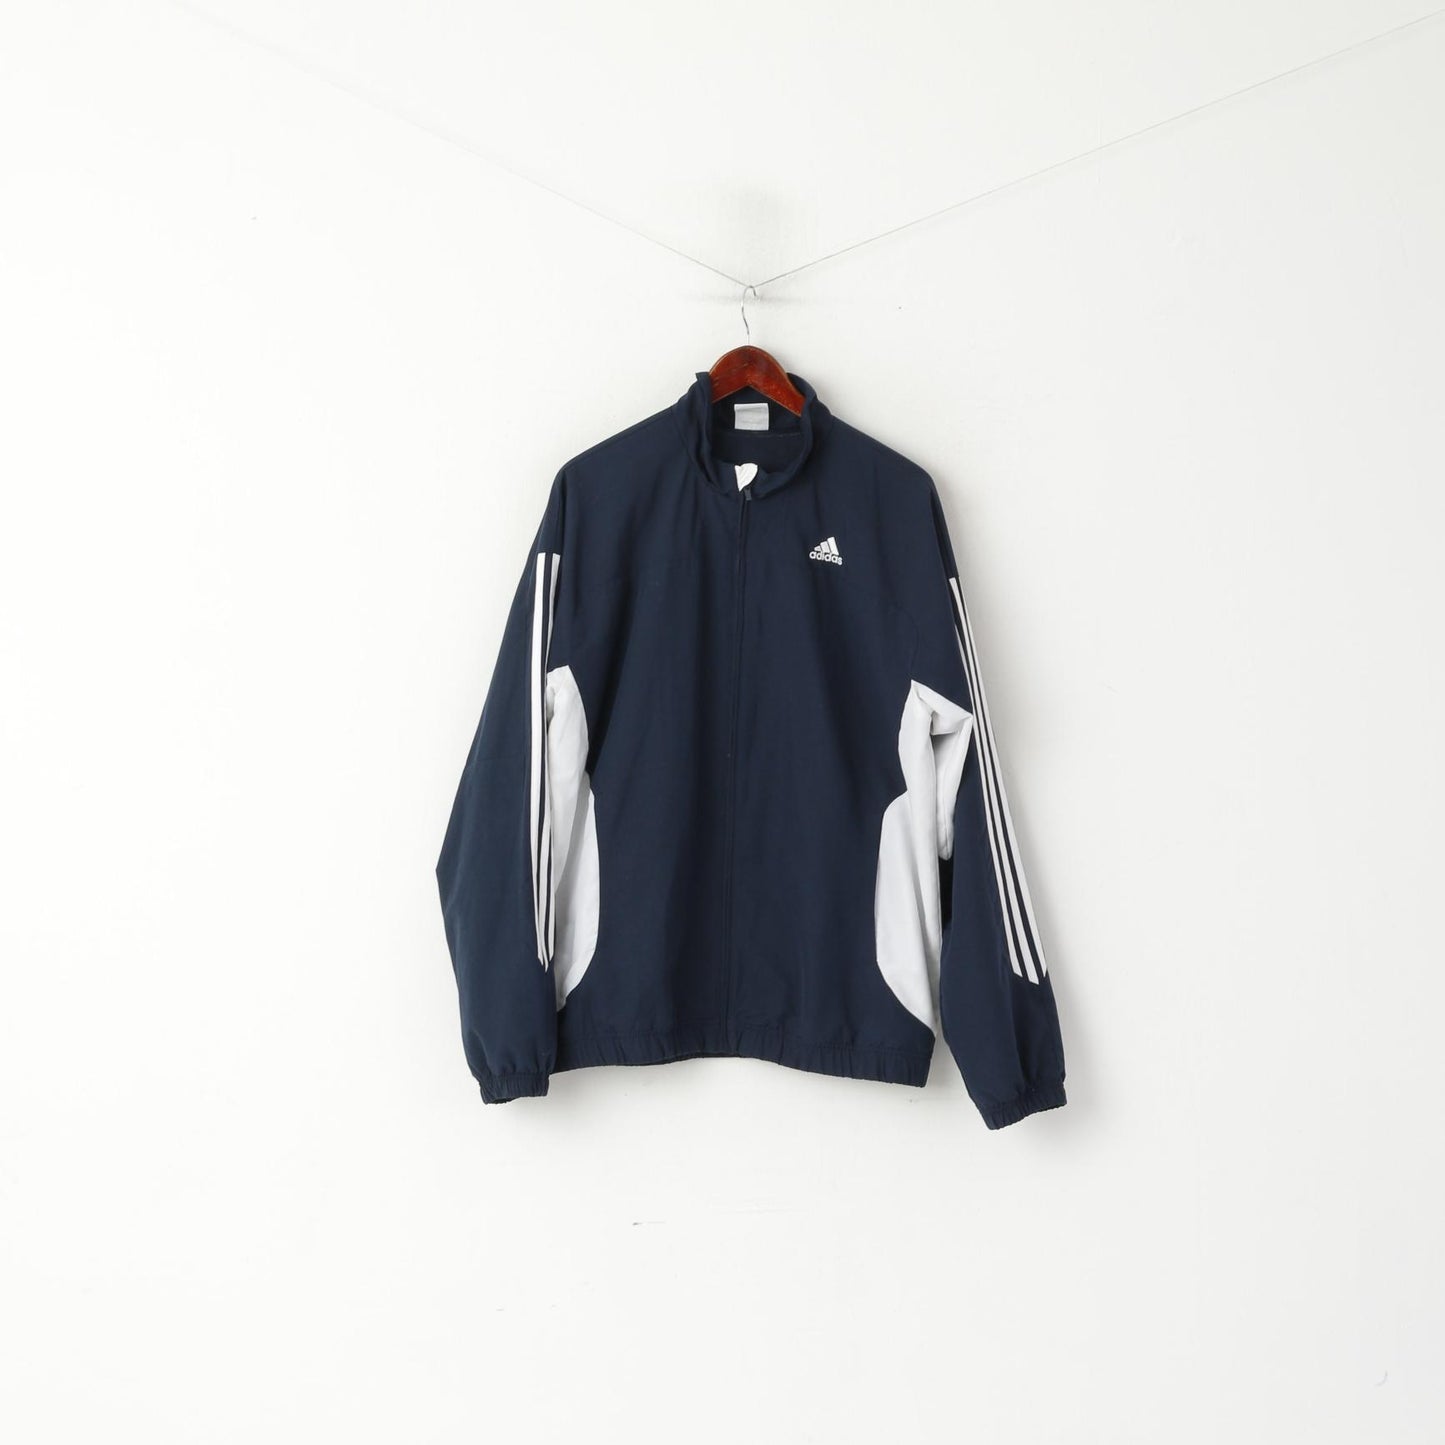 Adidas Men 44/46 L Jacket Navy Full Zipper Sport Training Lightweight Sportswear Top